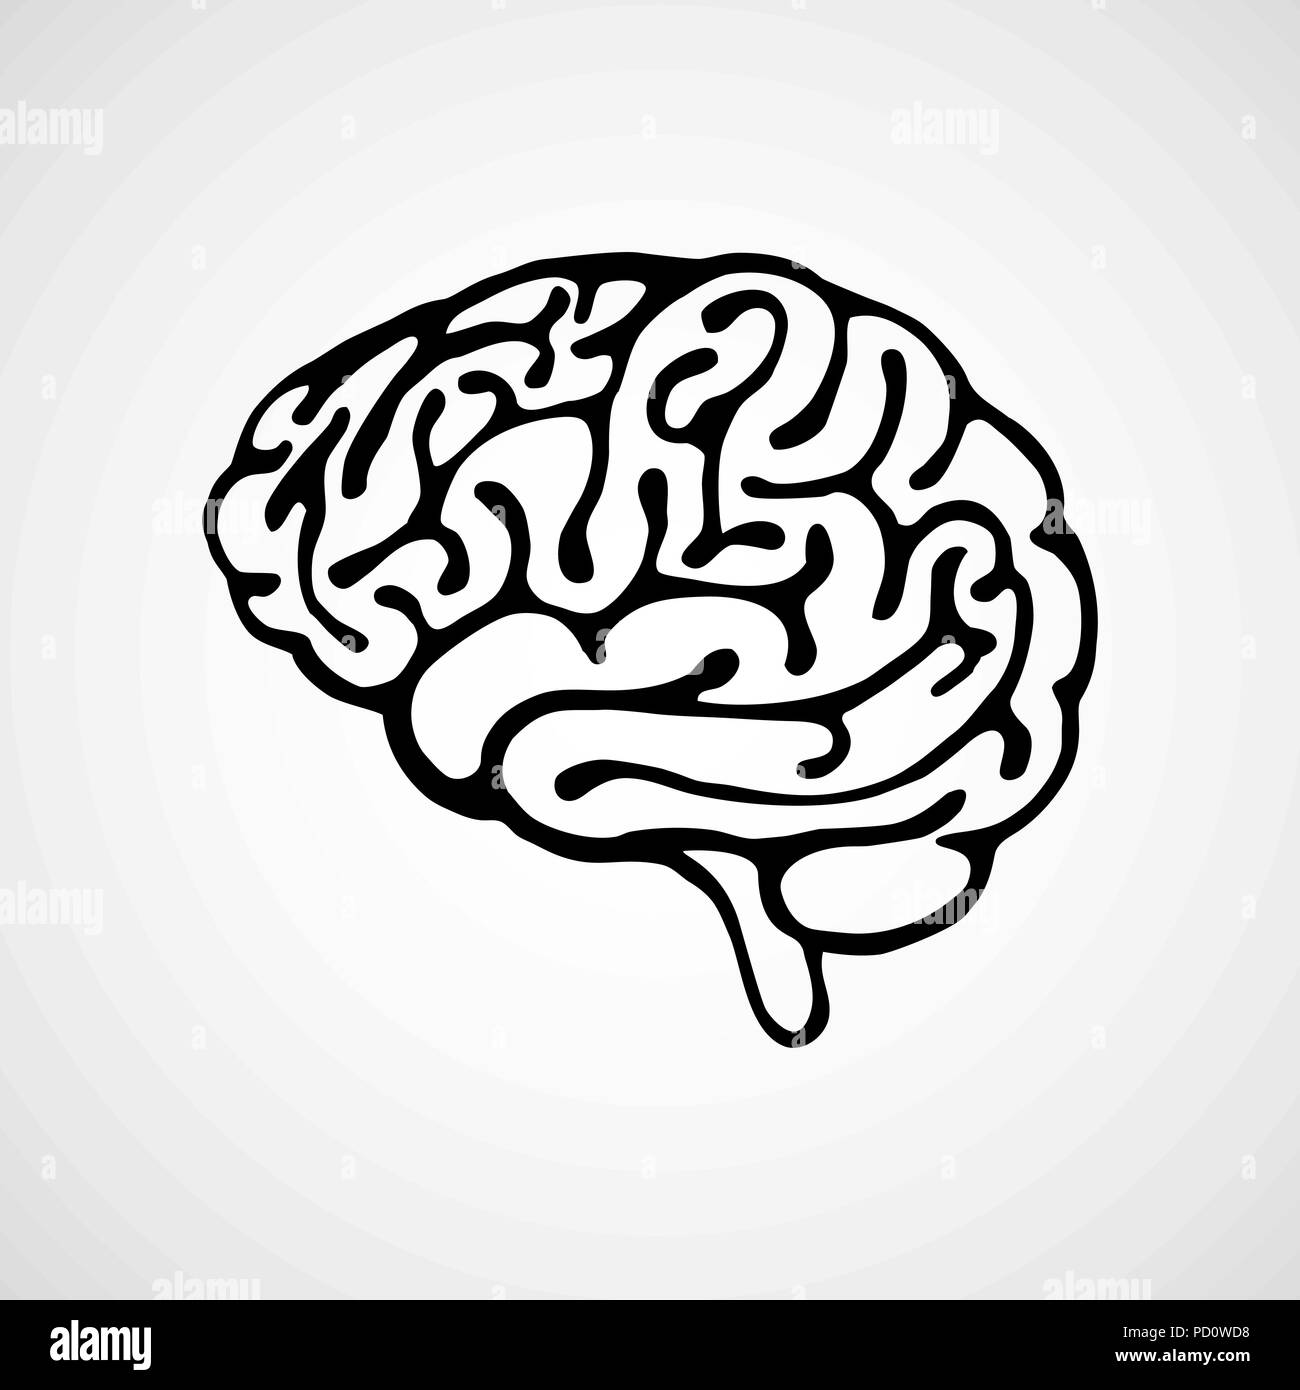 Vector Outline Illustration Of Human Brain On White Background Stock